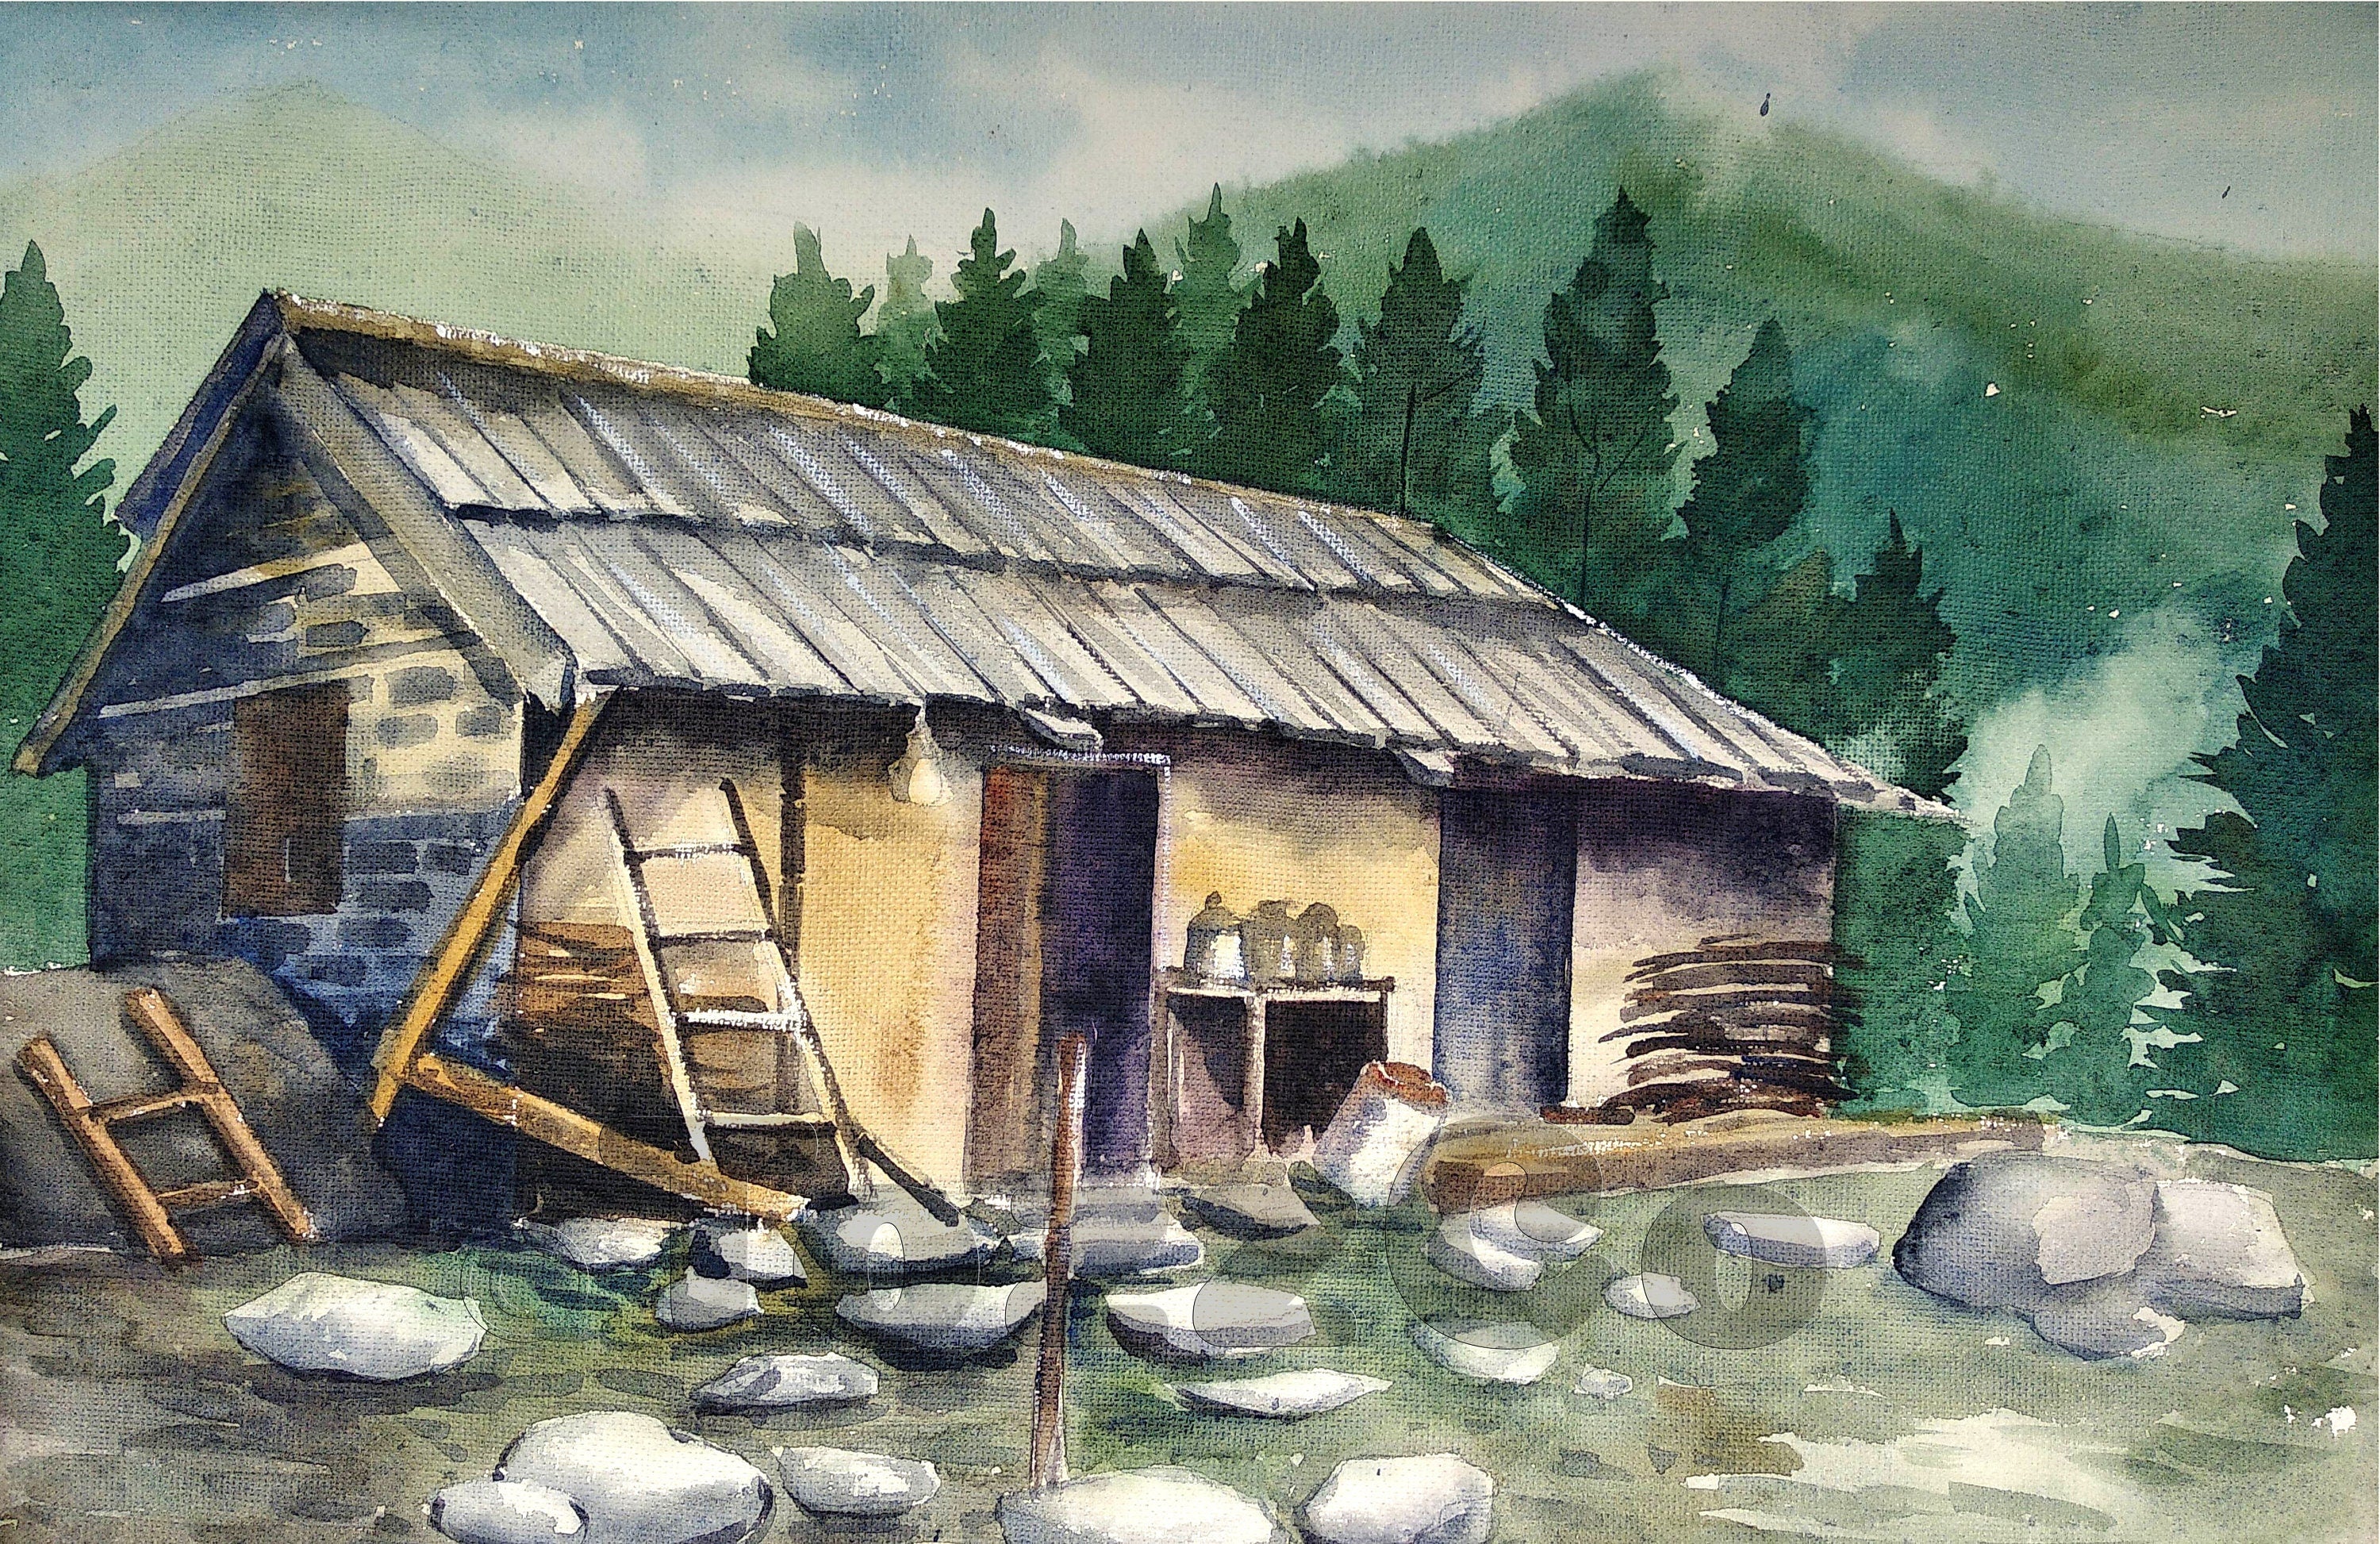 Mountain Lodge | Art Print